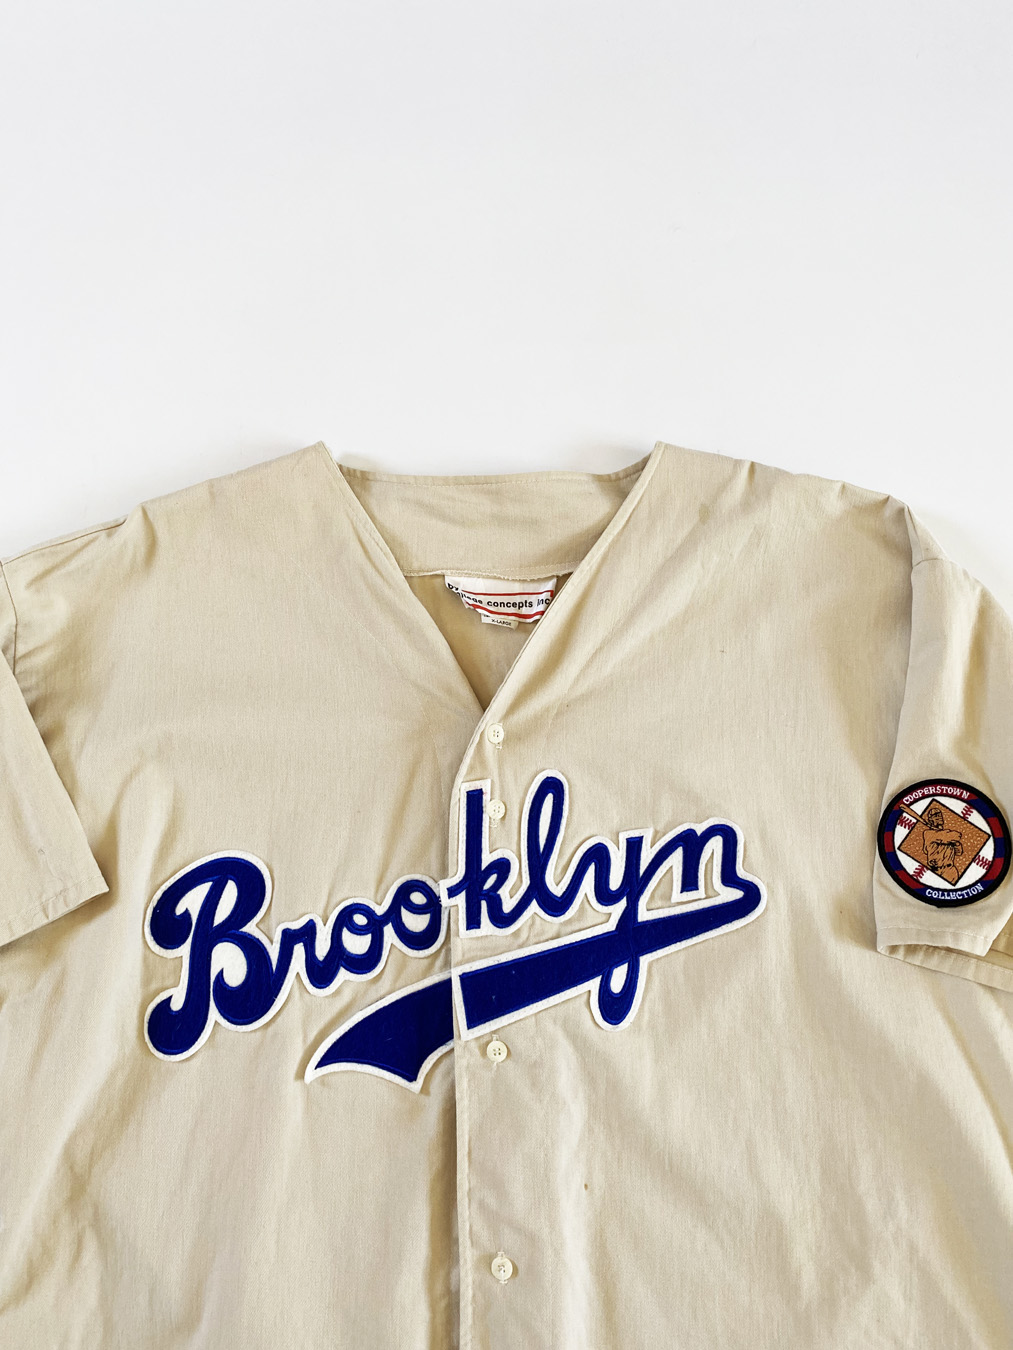 cooperstown brooklyn dodgers jersey